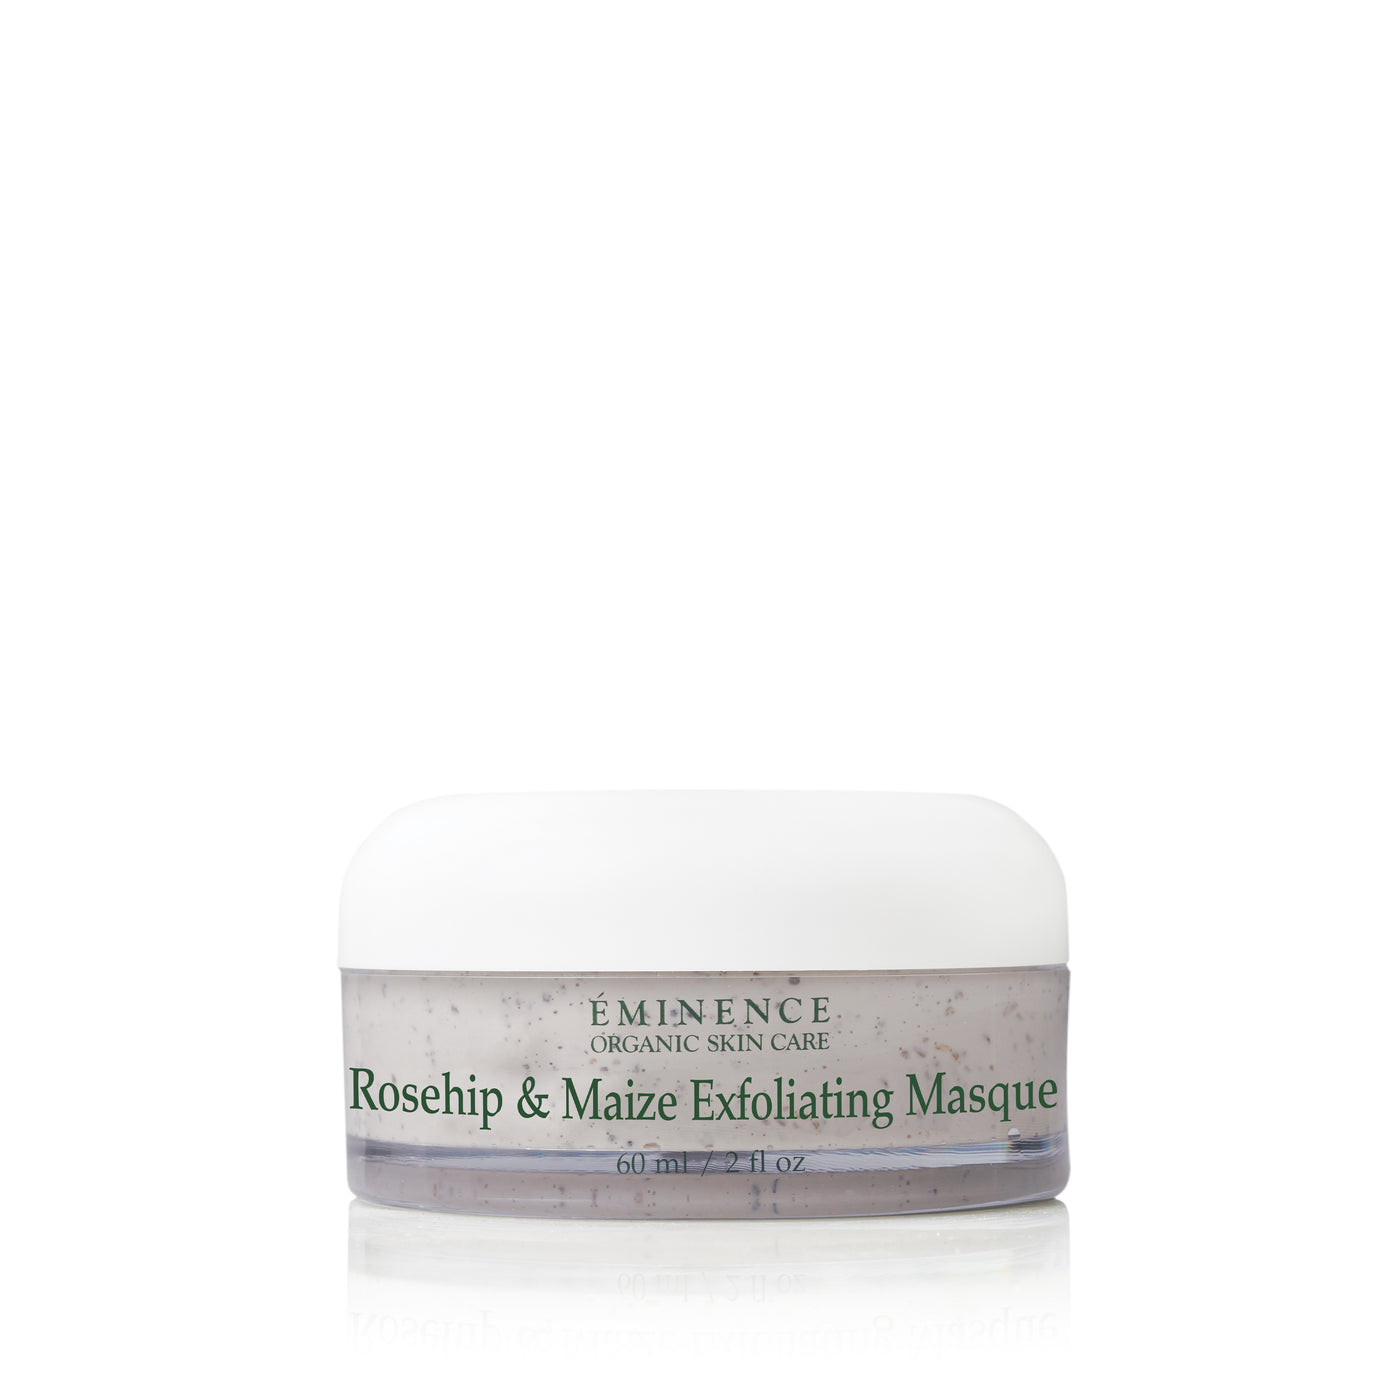 Eminence Organics Rosehip & Maize Exfoliating Masque - Radiance Clean Beauty